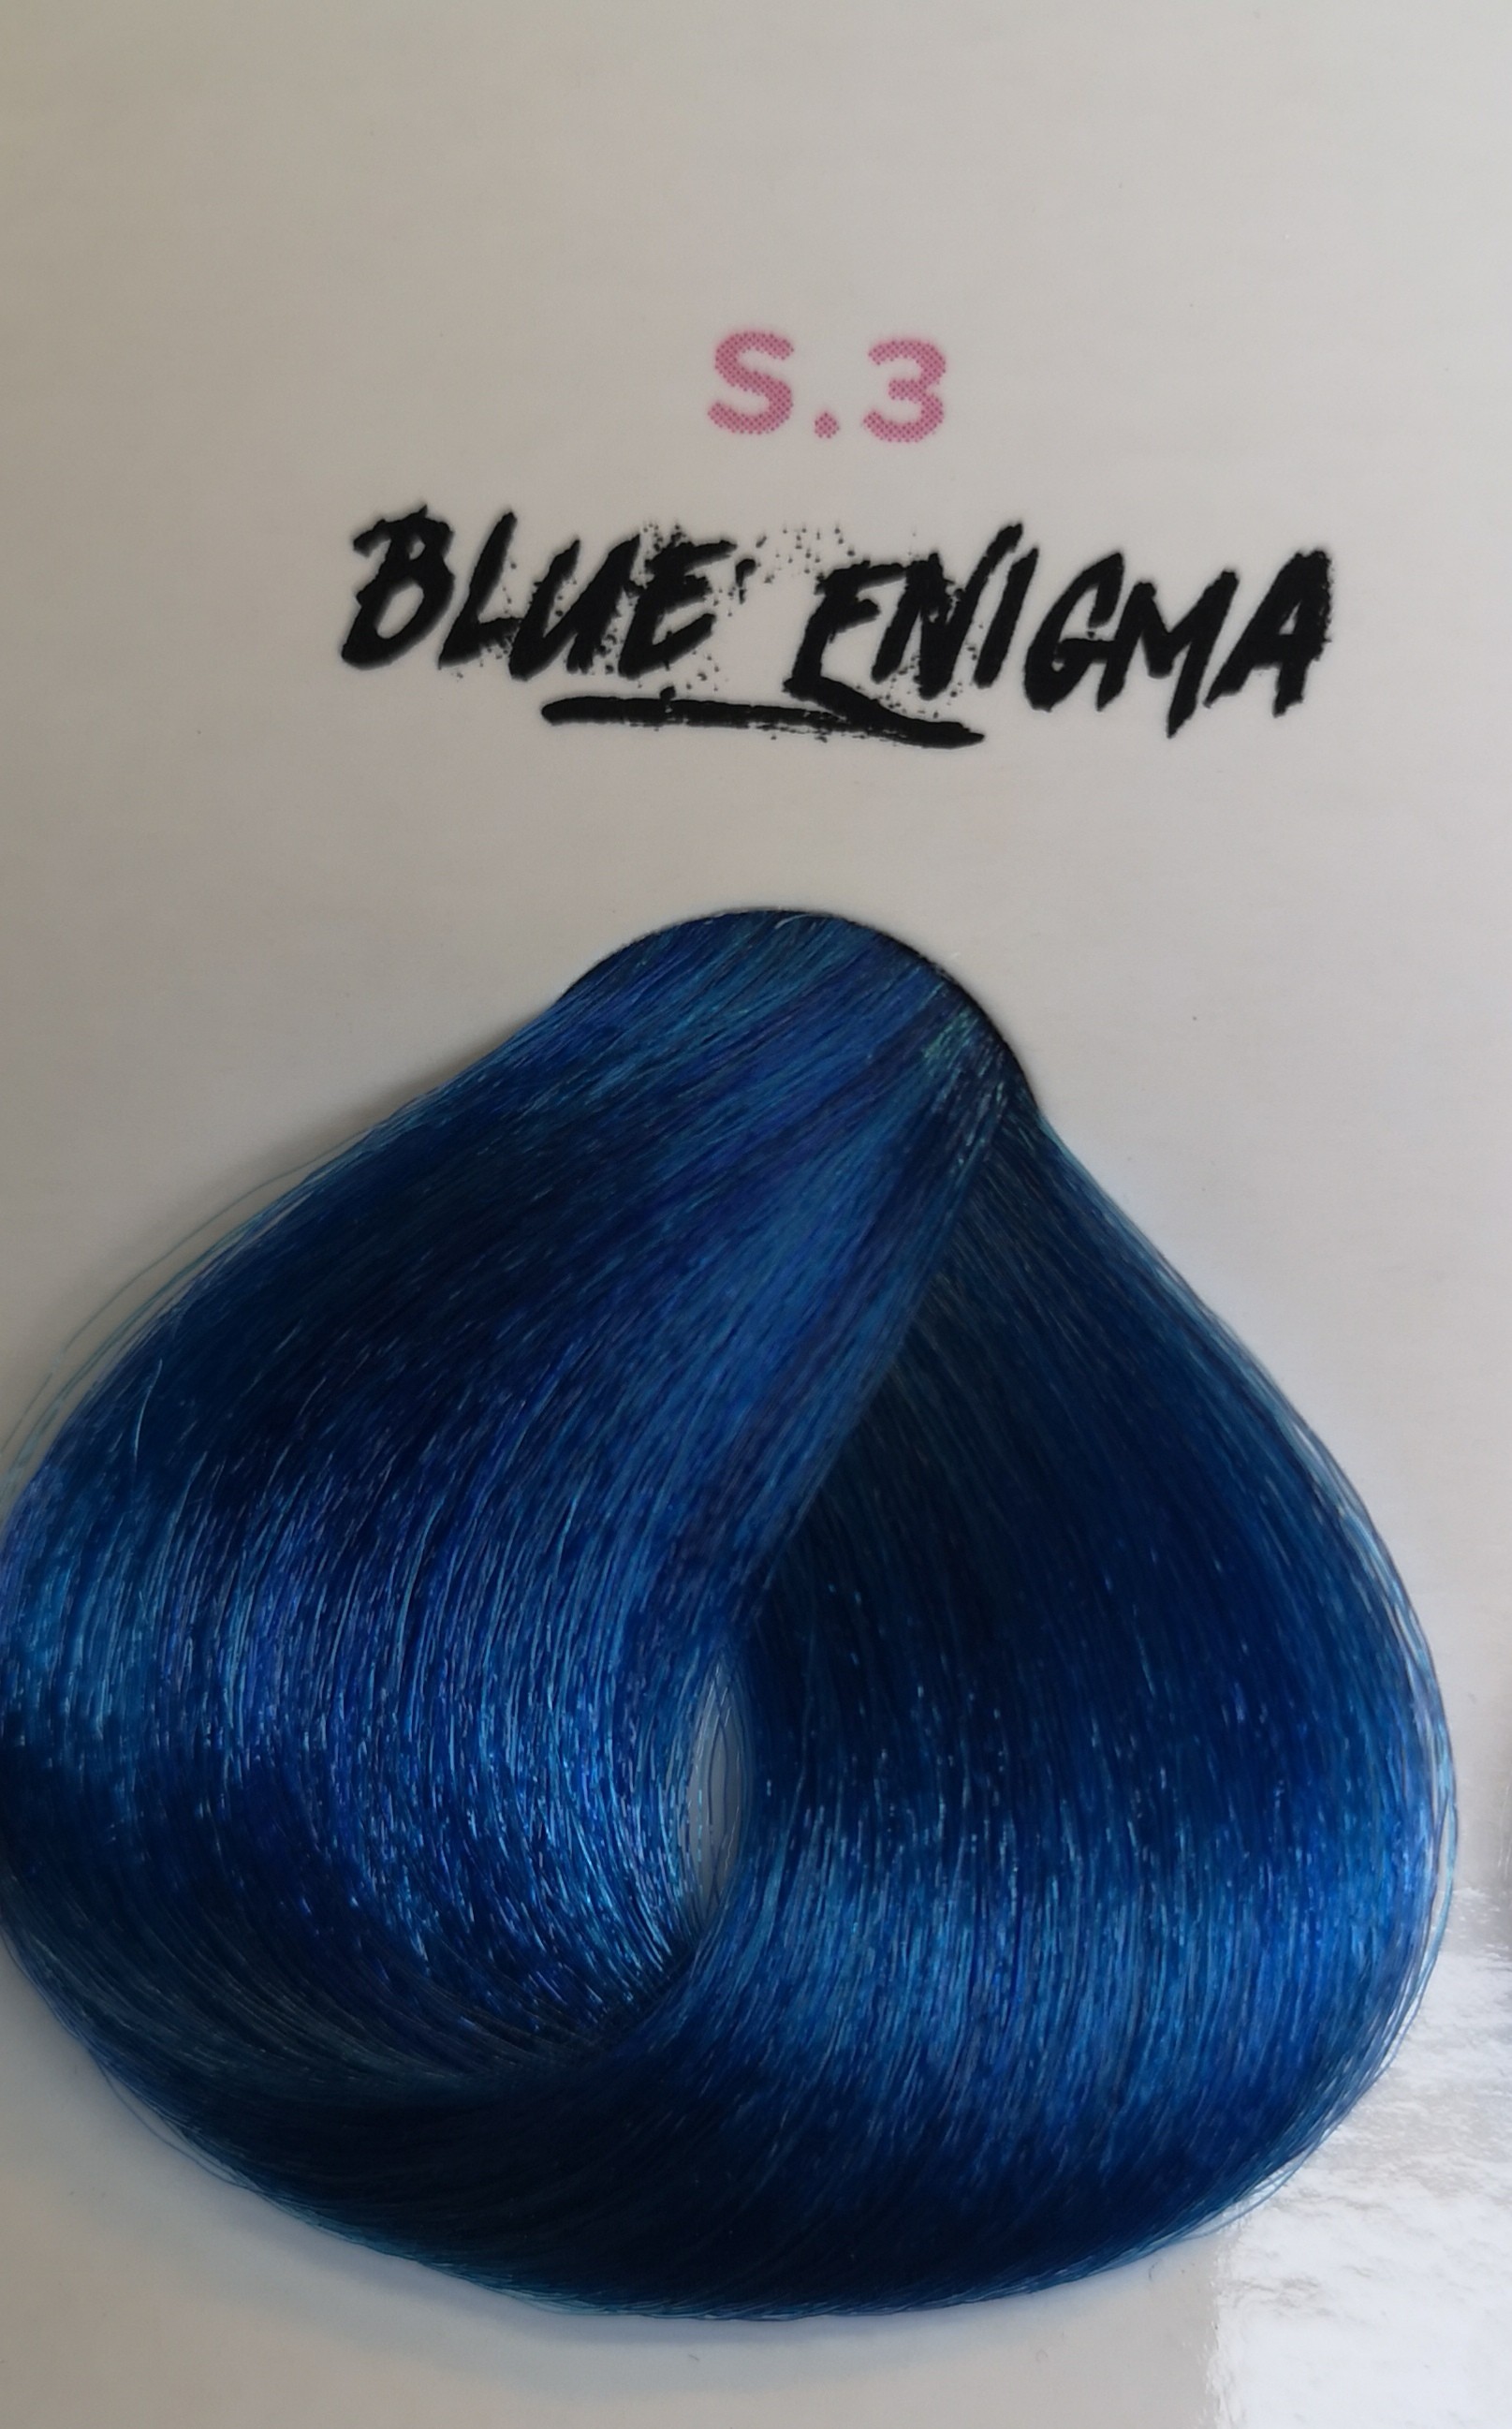 blue enigma